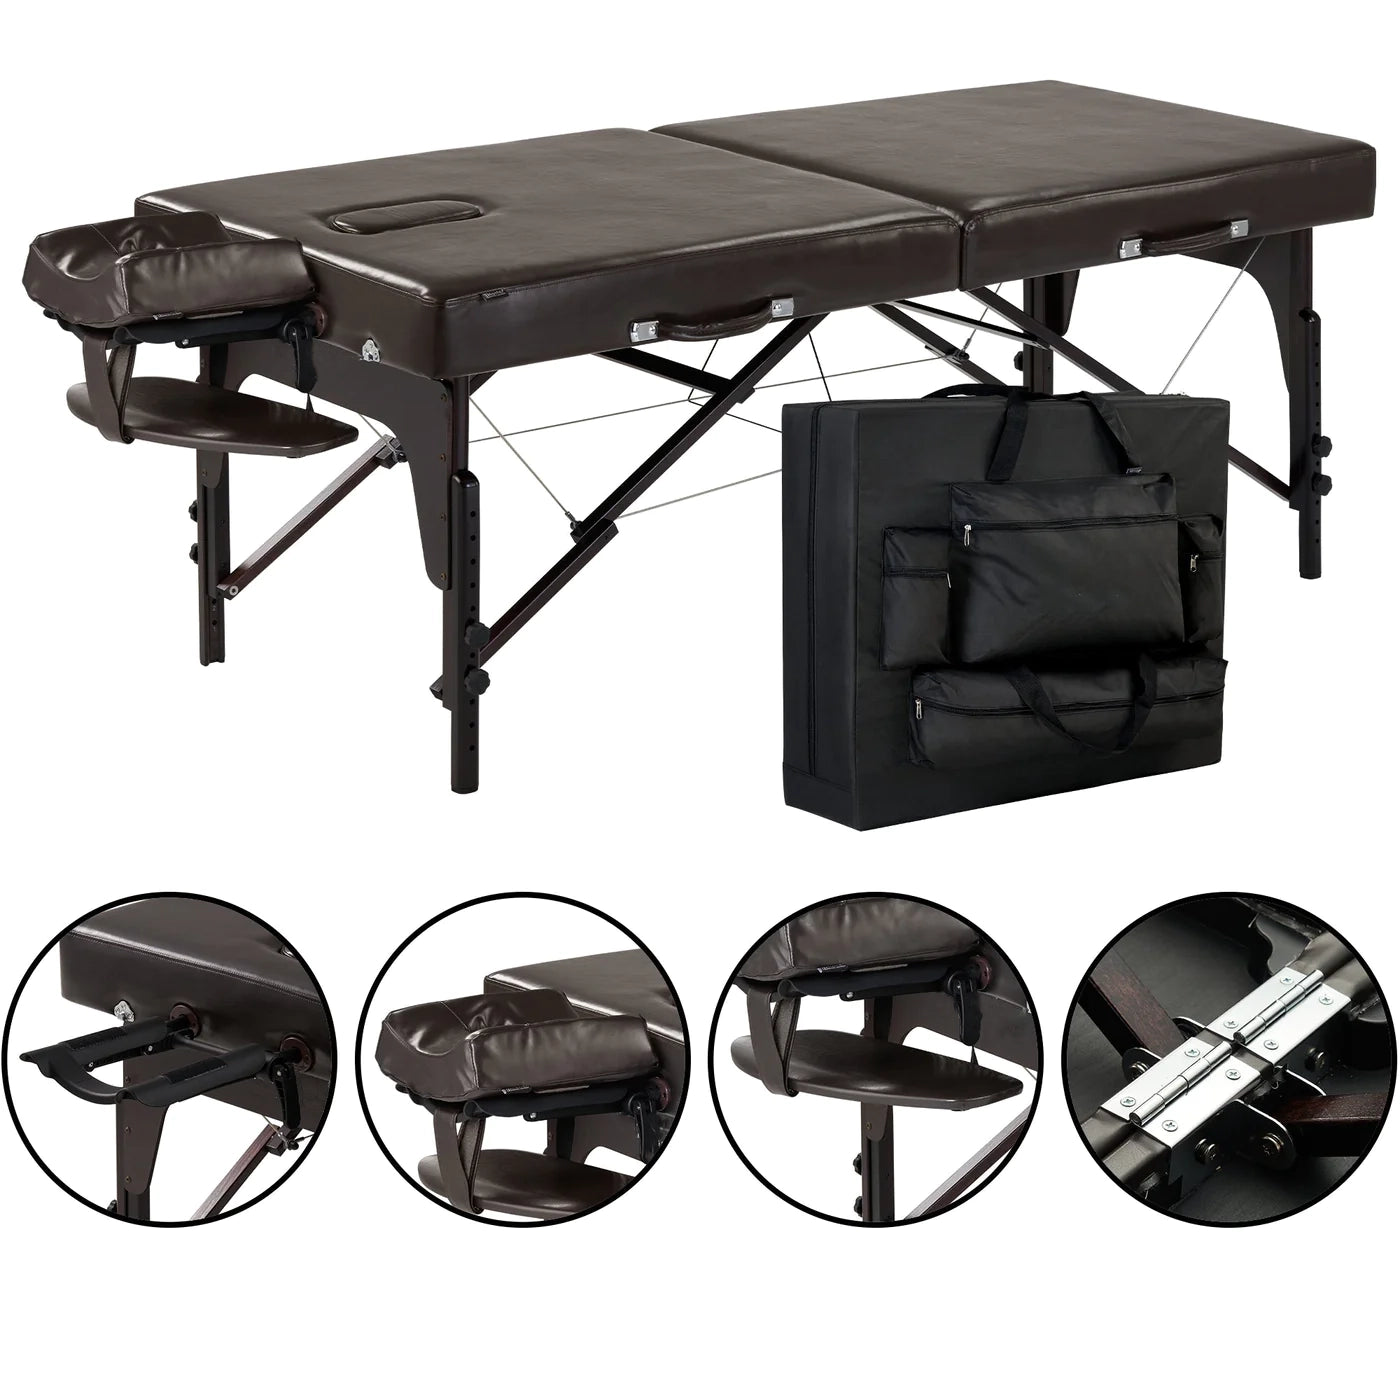 Bella2bello 31” SUPREME™ LX Portable Massage Table Package with MEMORY FOAM Layer, Reiki Panels, & Face Port! (Chocolate Italia Color)